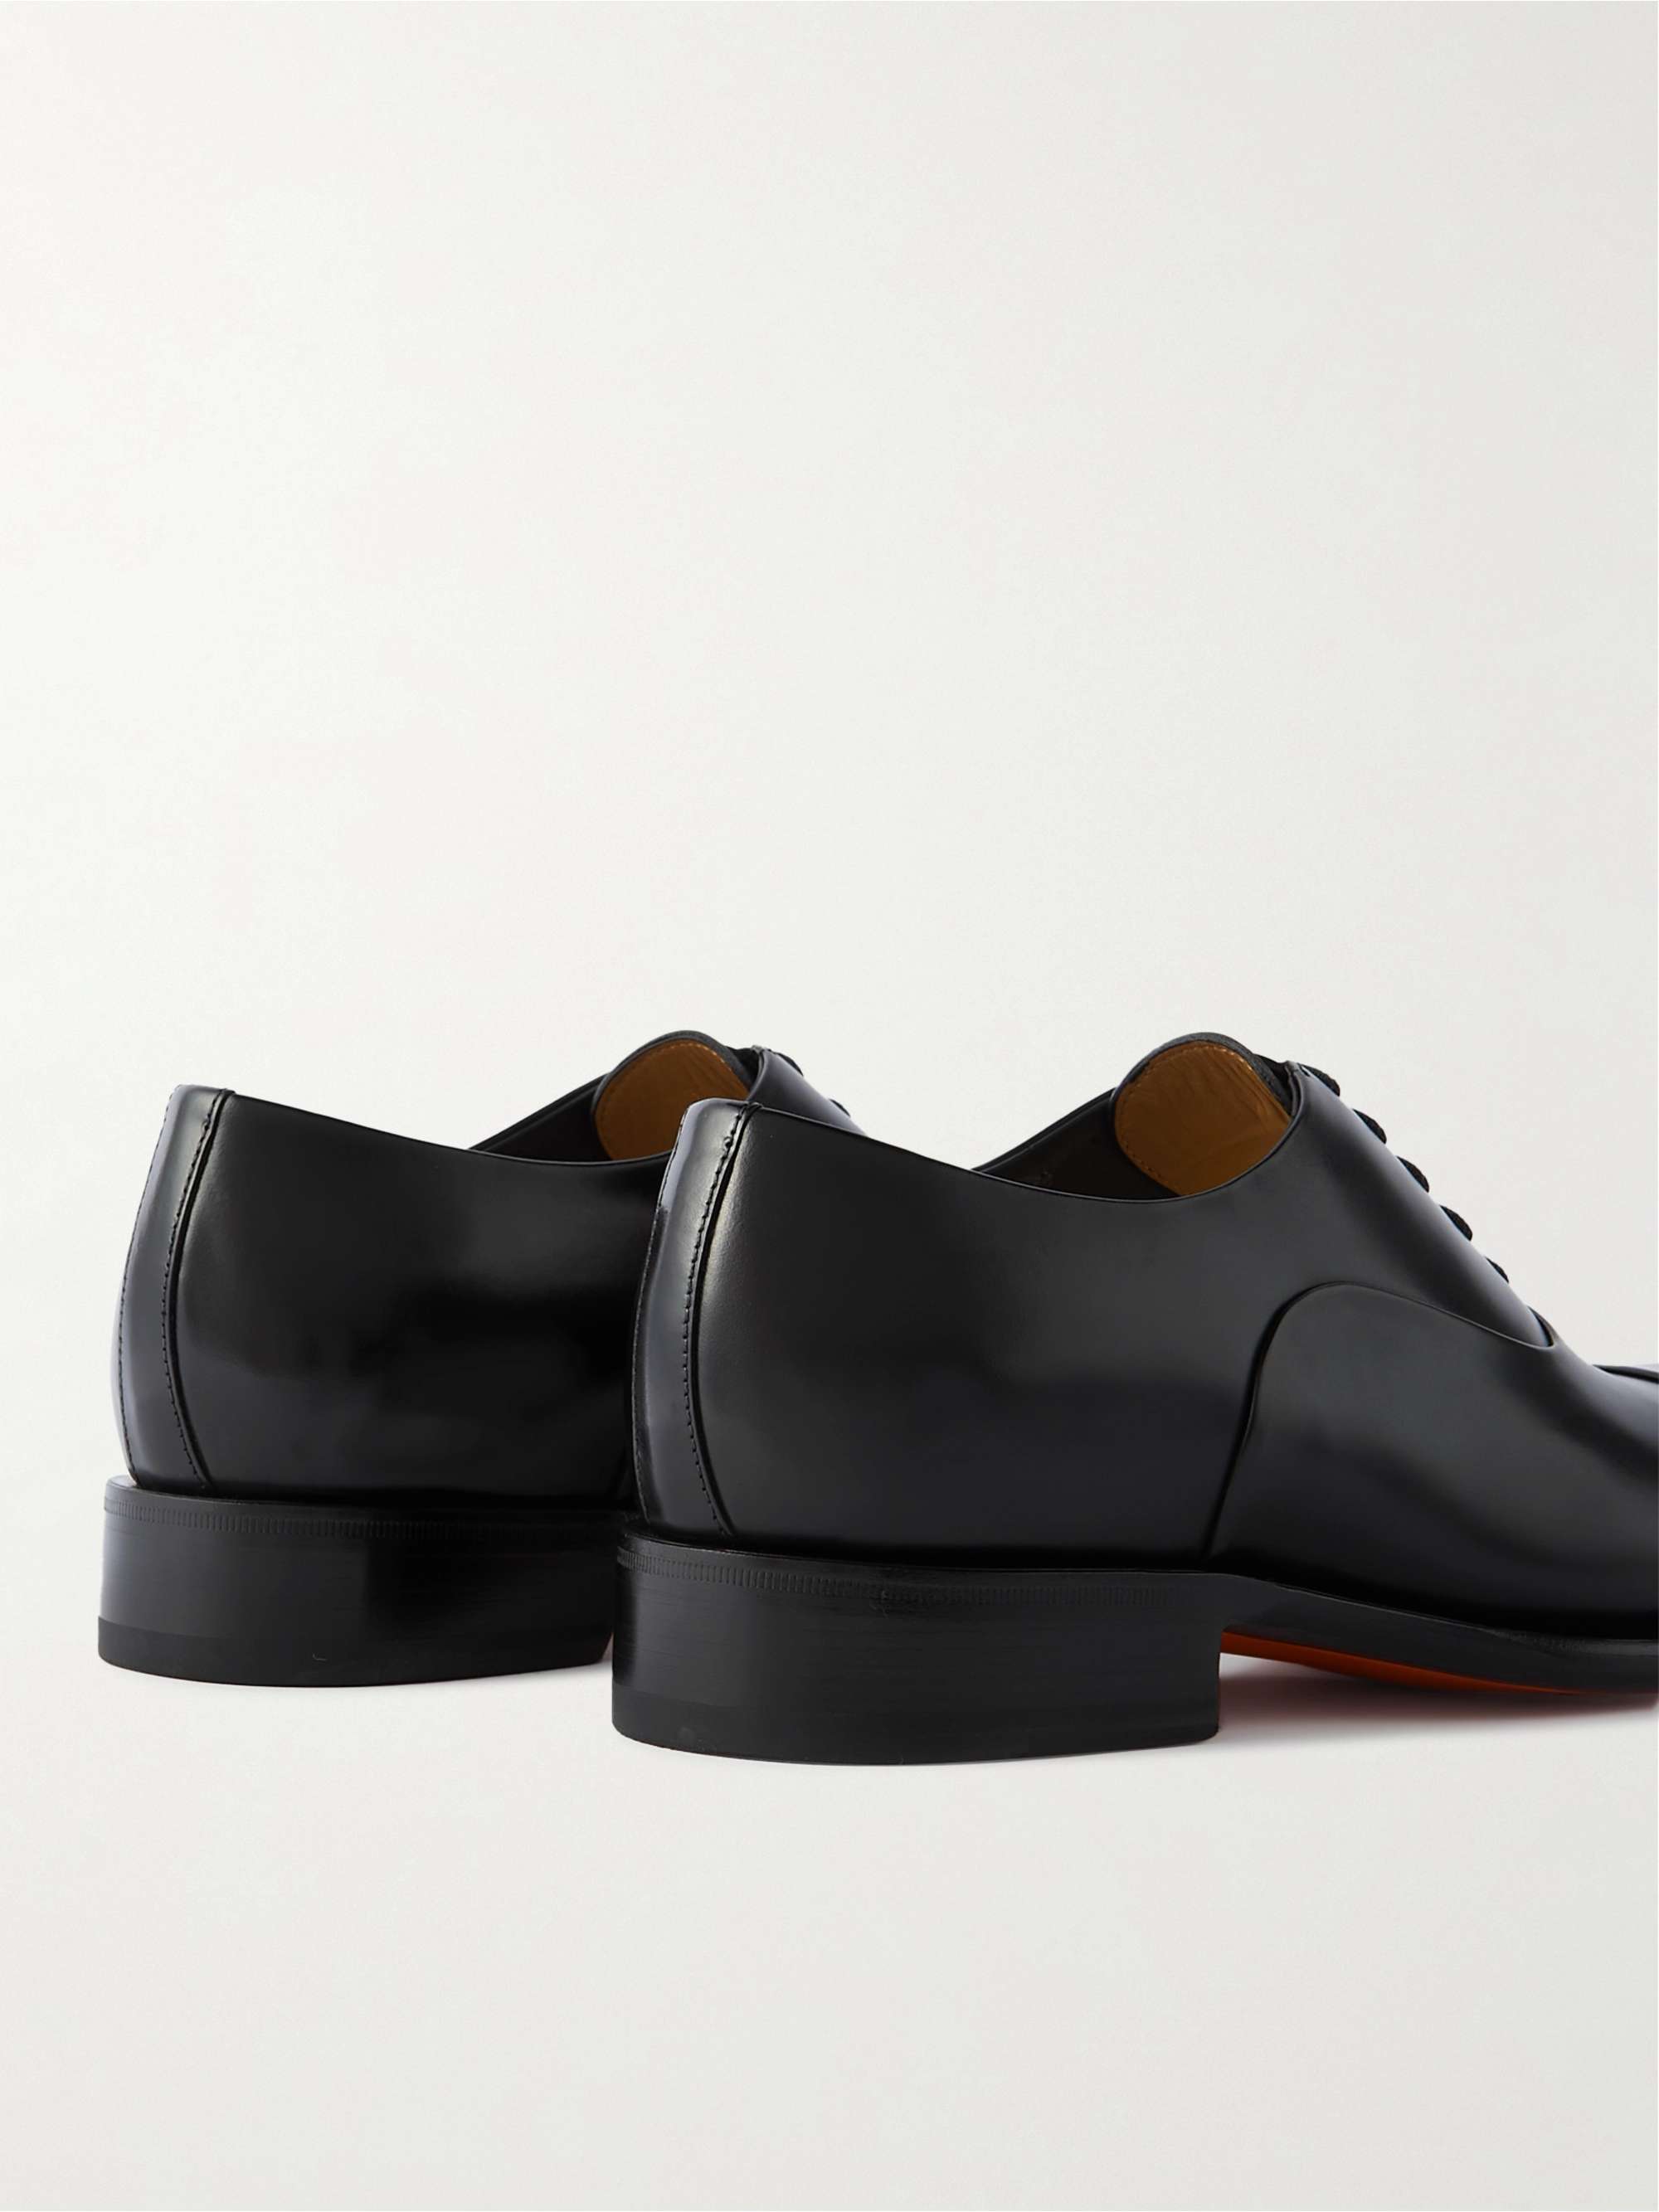 SANTONI Haniel Whole-Cut Leather Oxford Shoes